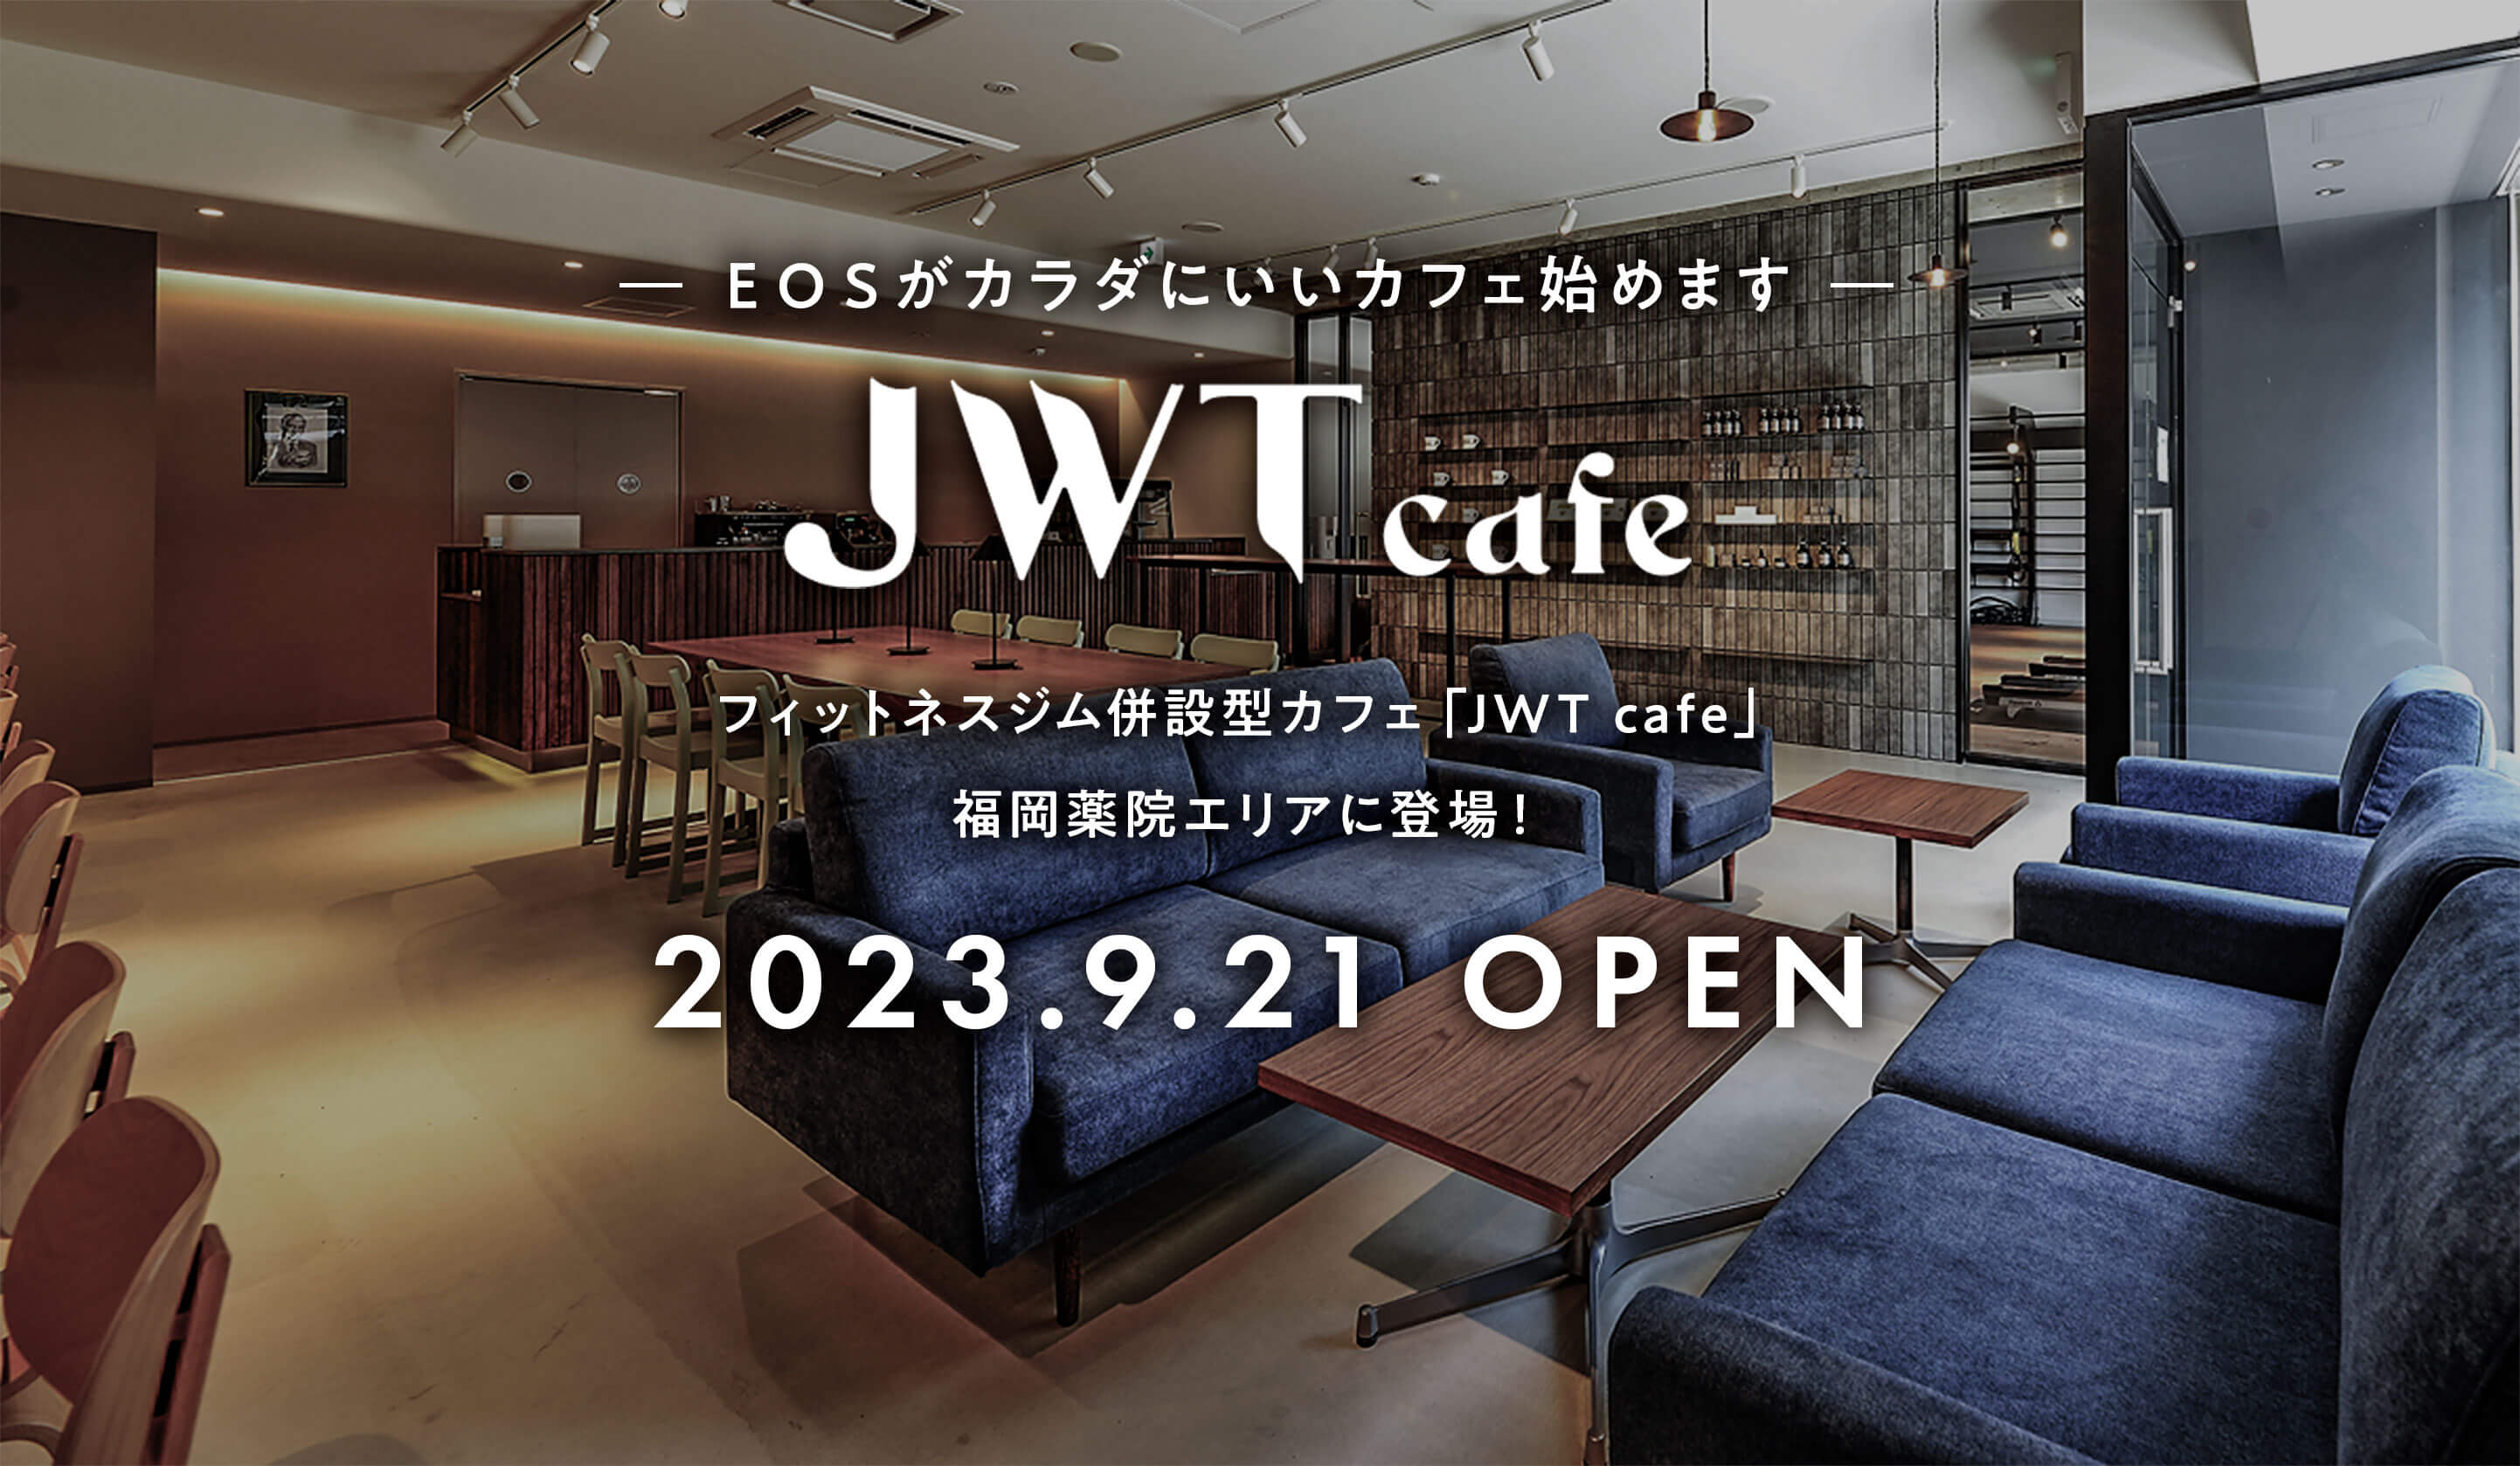 JWT cafe メインビジュアル